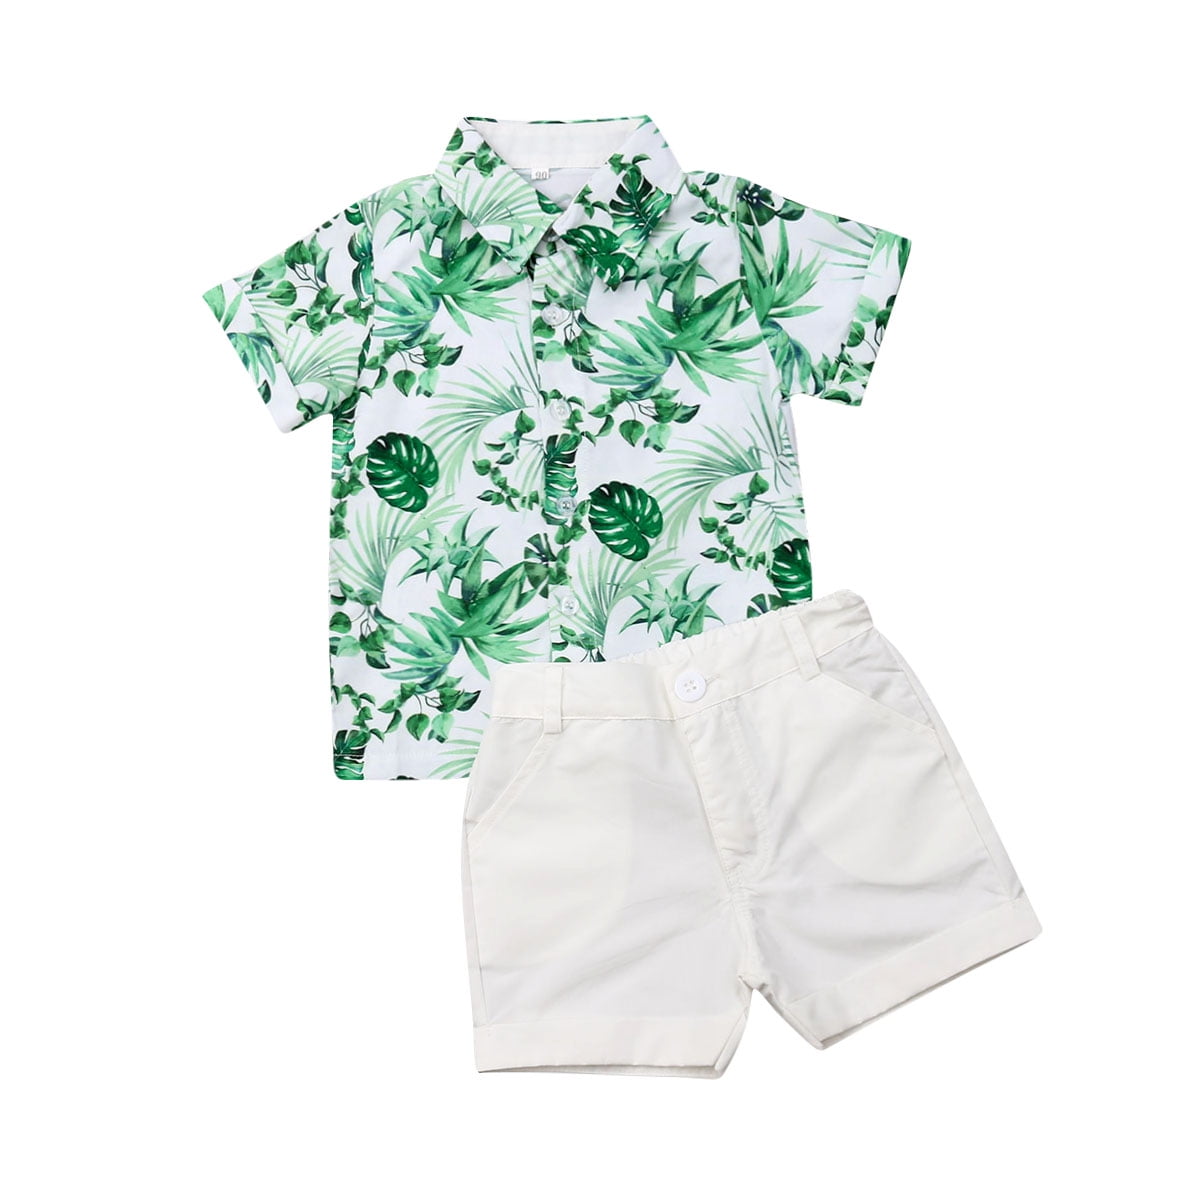 2PCS Toddler Kids Baby Boy Gentleman Shirt Tops+Pants Shorts Clothes Outfits Set 